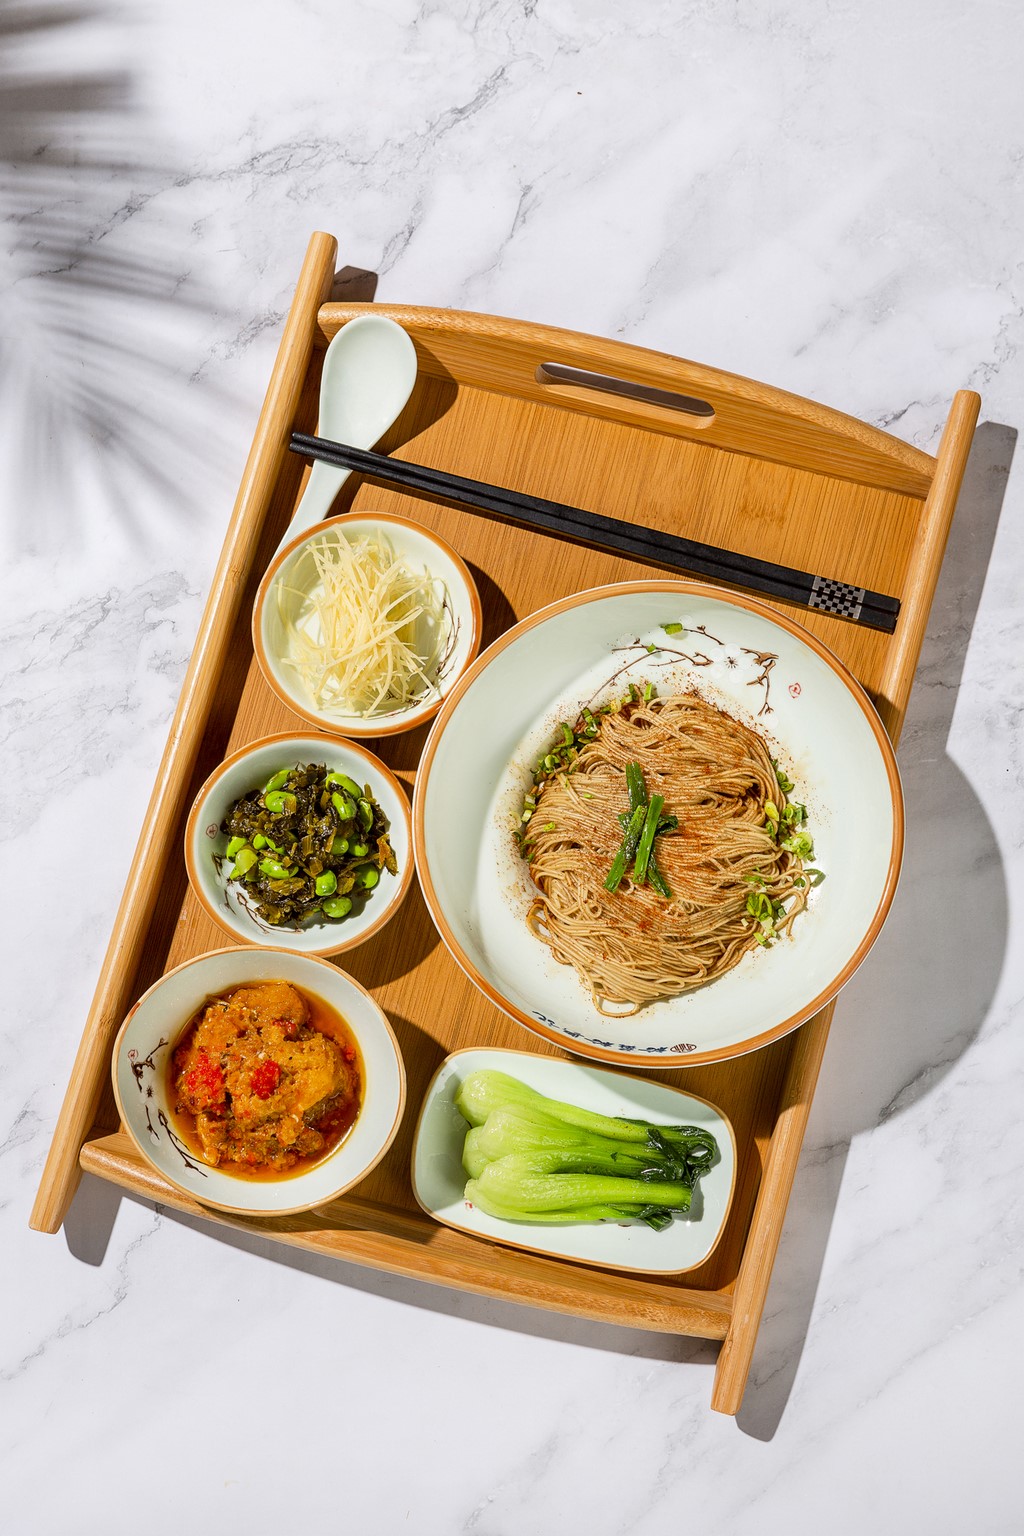 Featured image for “First Yu Xing Ji Noodle Shop Settled in Sheraton Shenzhen Futian Hotel for a Culinary Journey in Shenzhen”